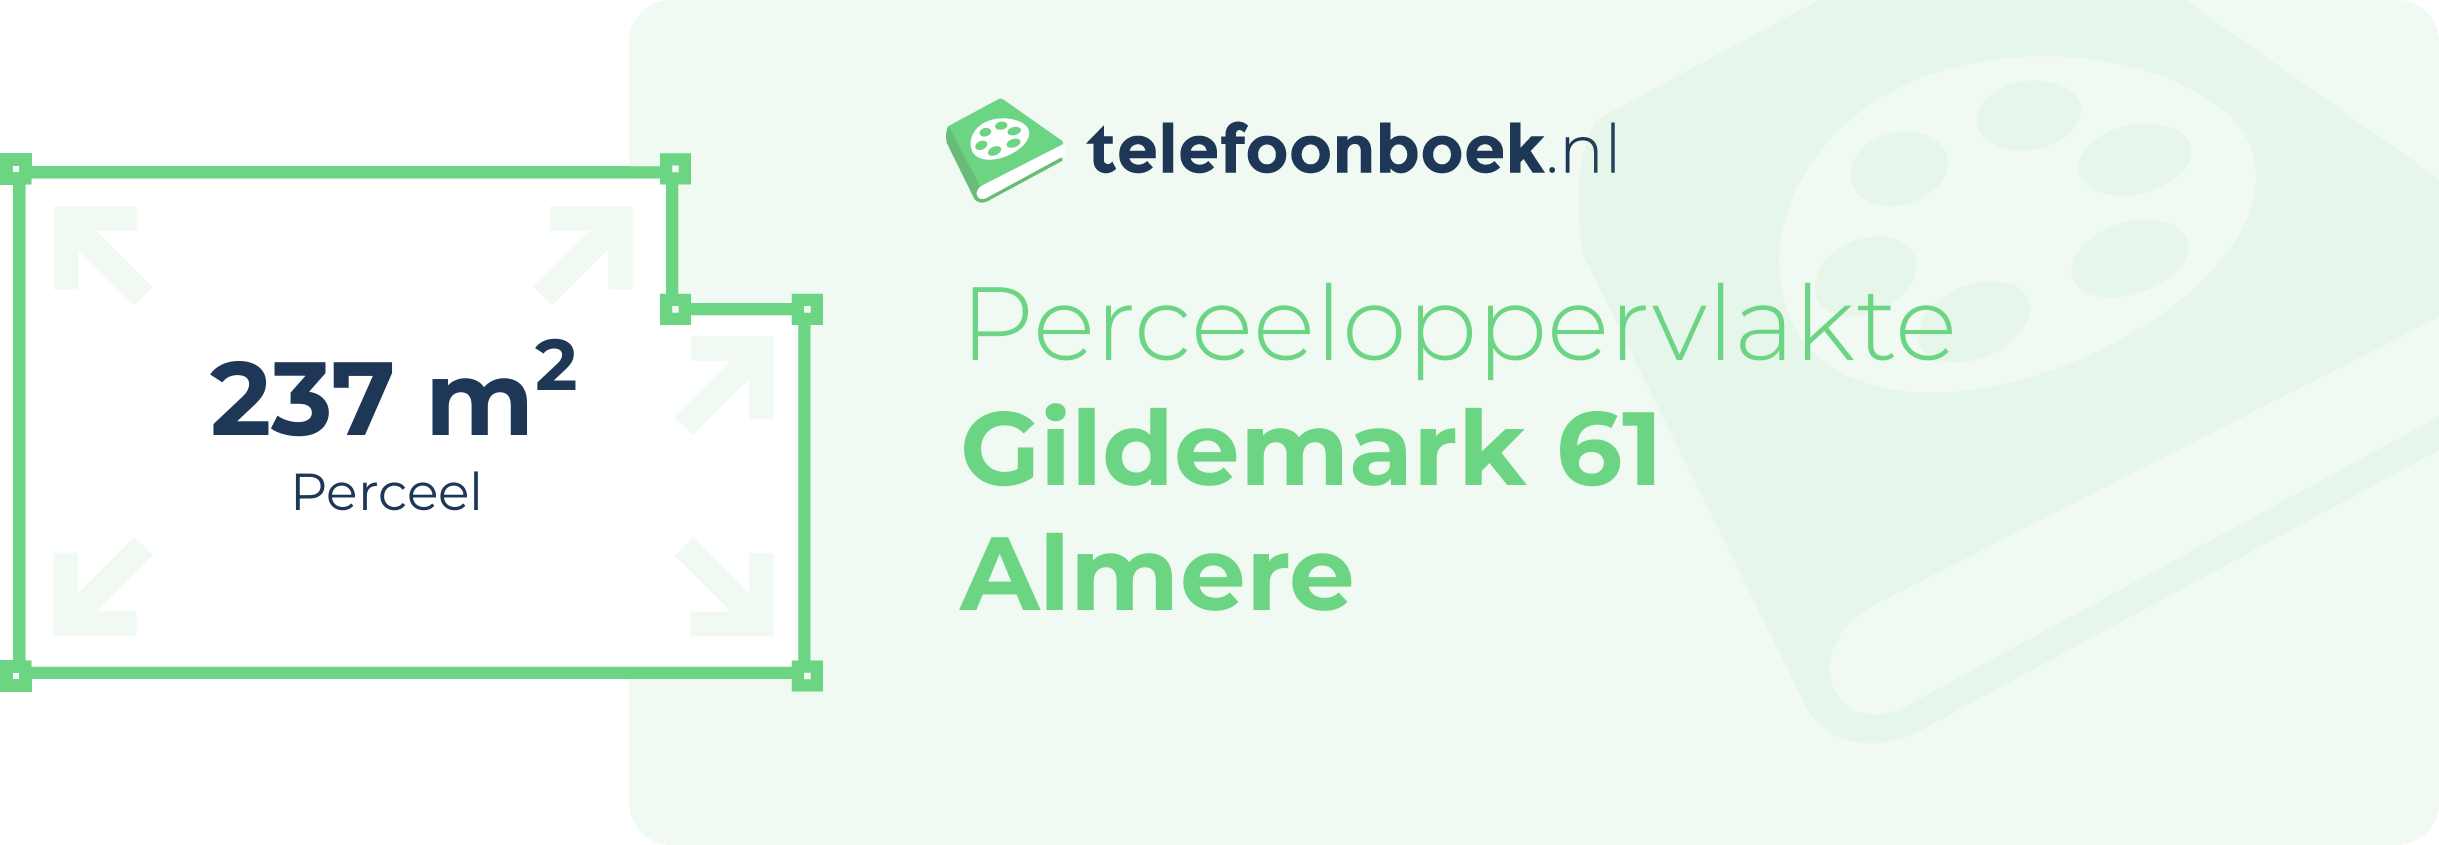 Perceeloppervlakte Gildemark 61 Almere